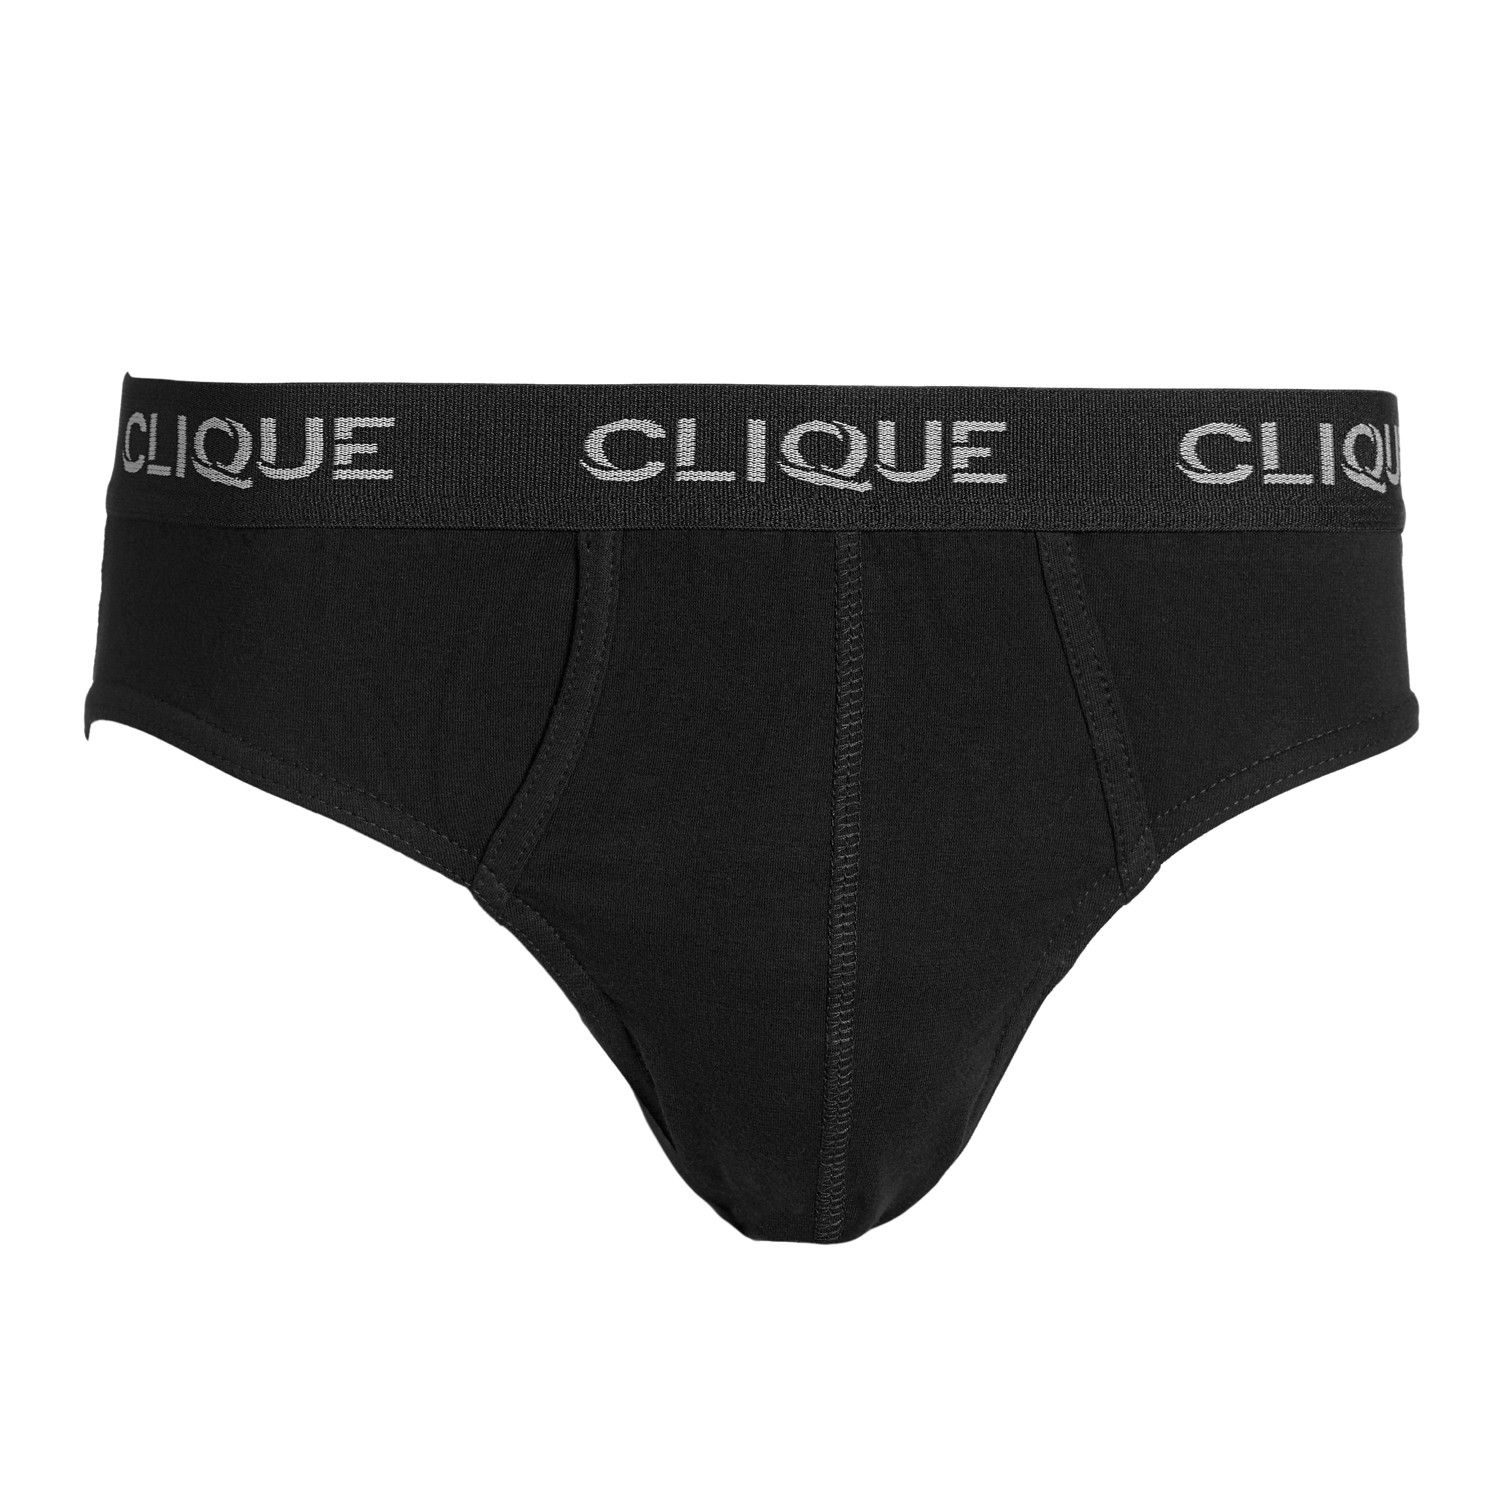 Clique Midi Brief Black 035013-99